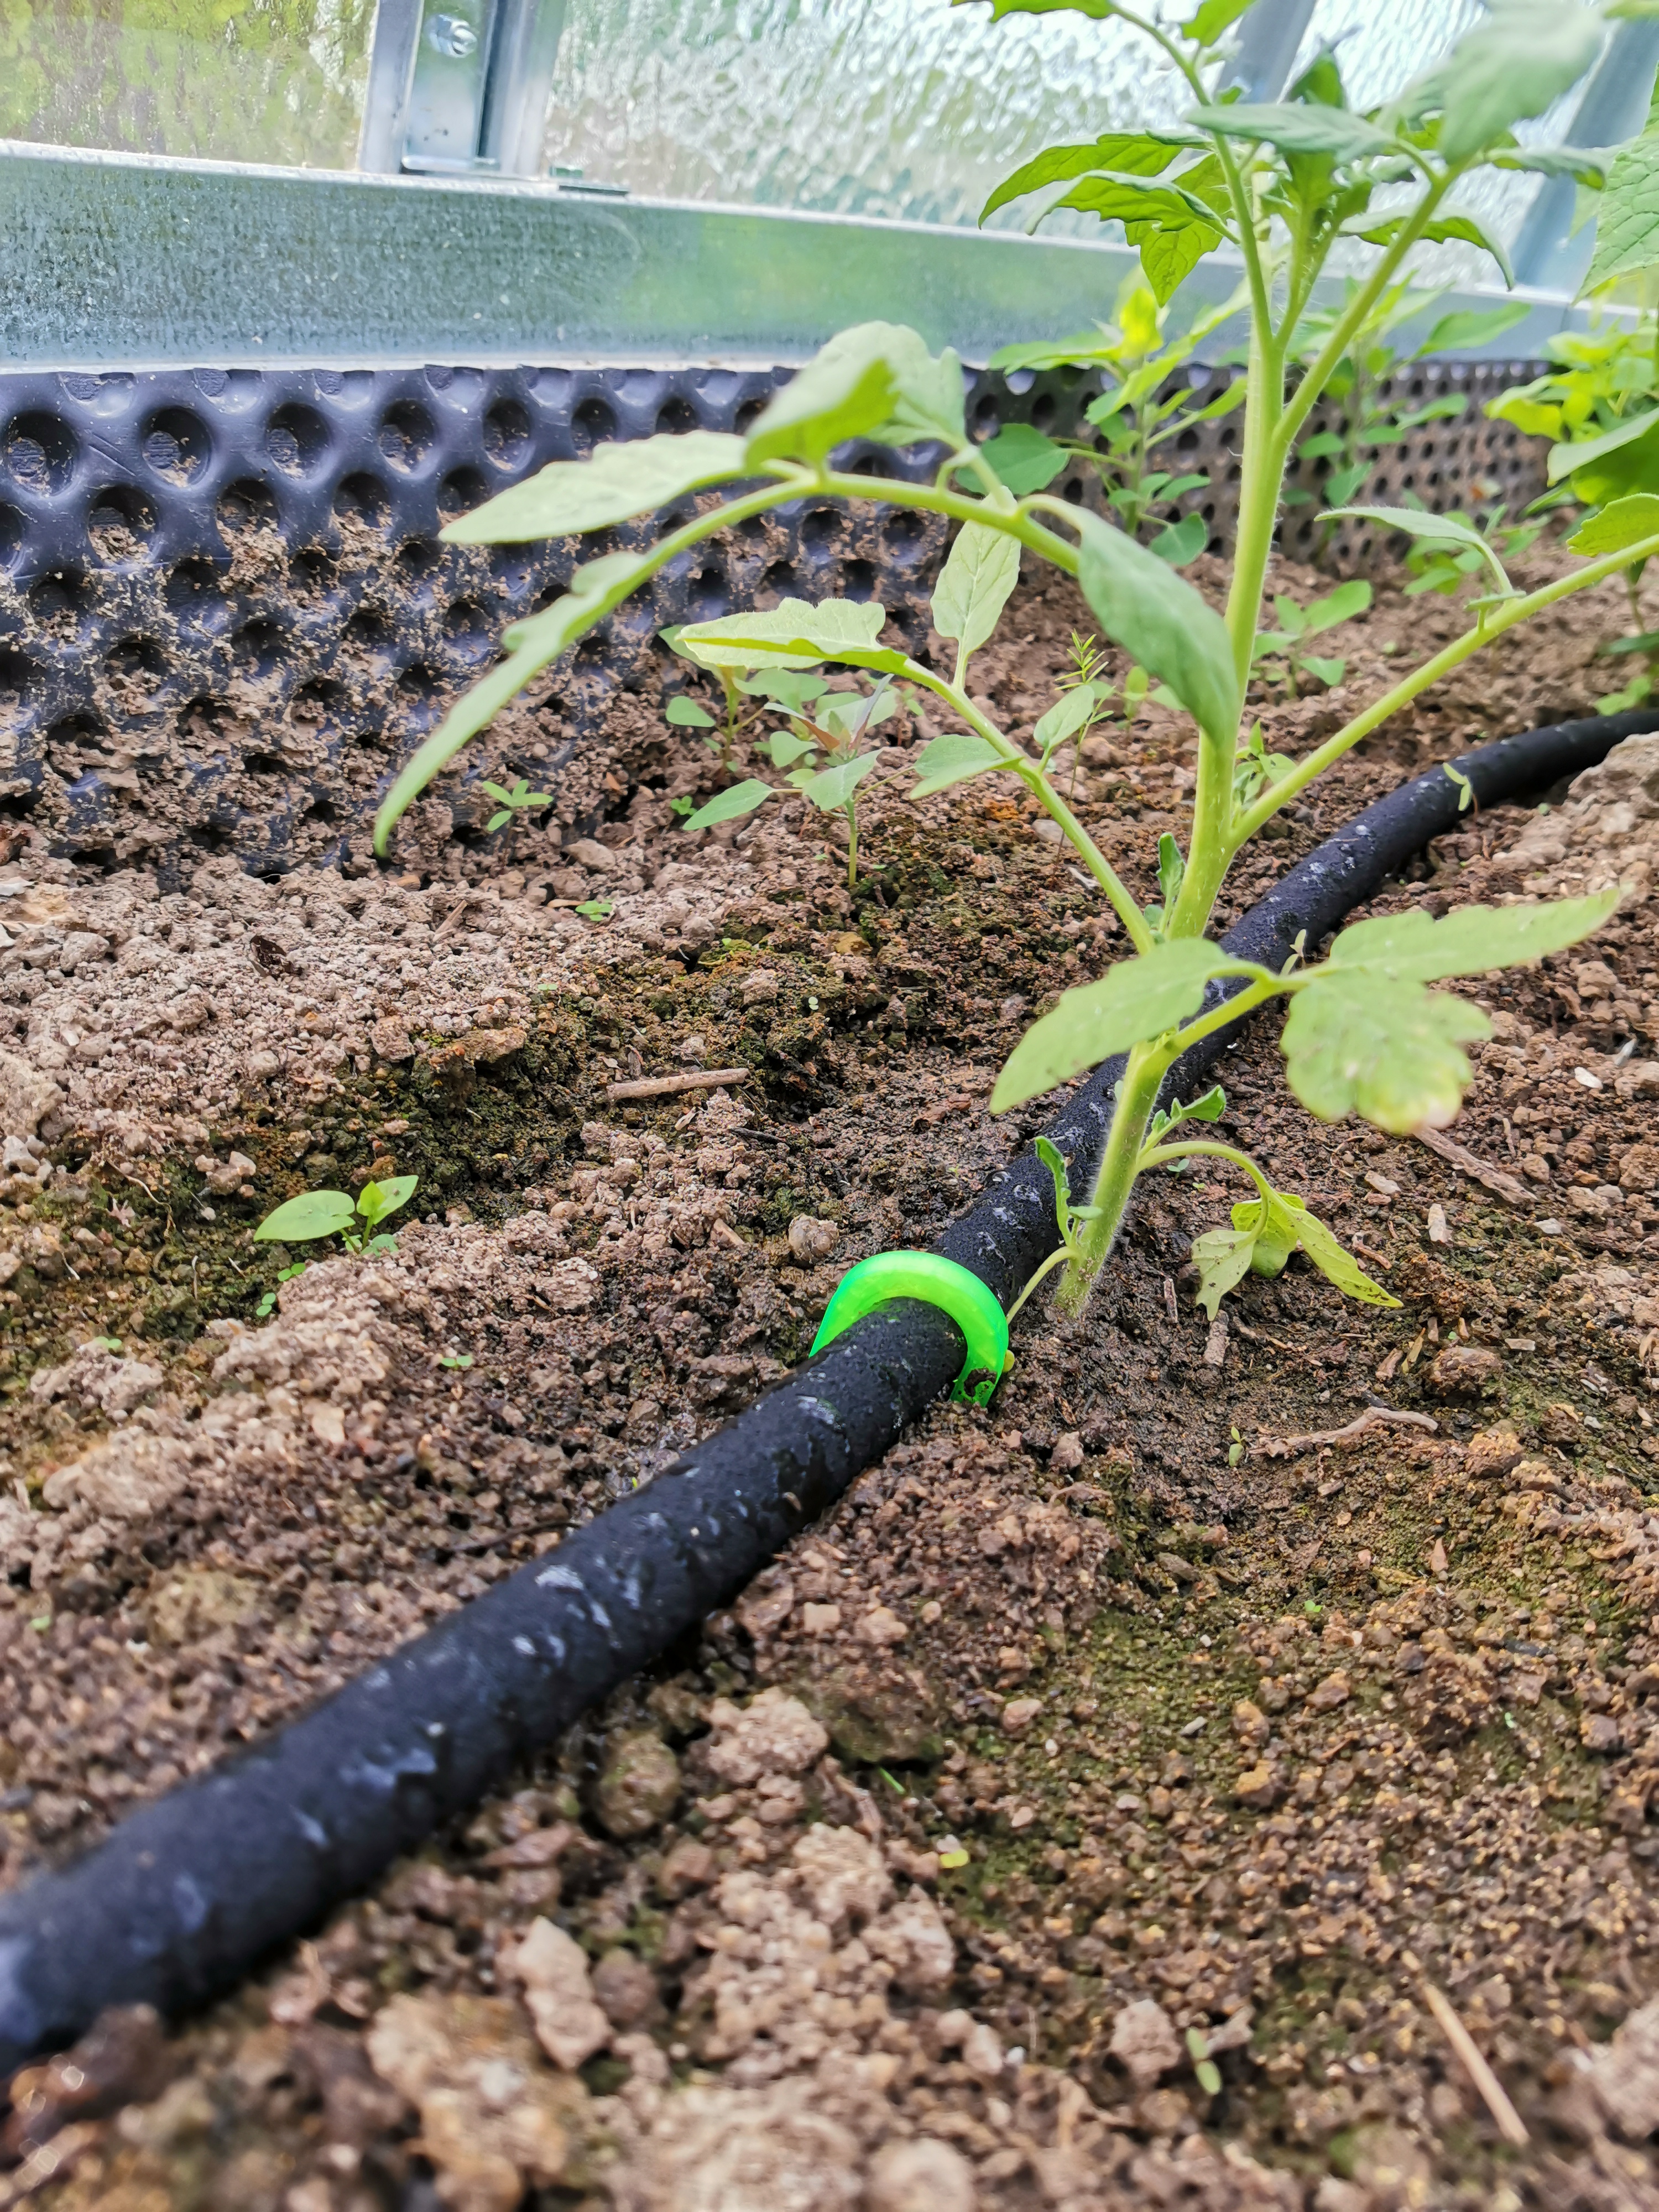 Hook - Gardena watering/irrigation system